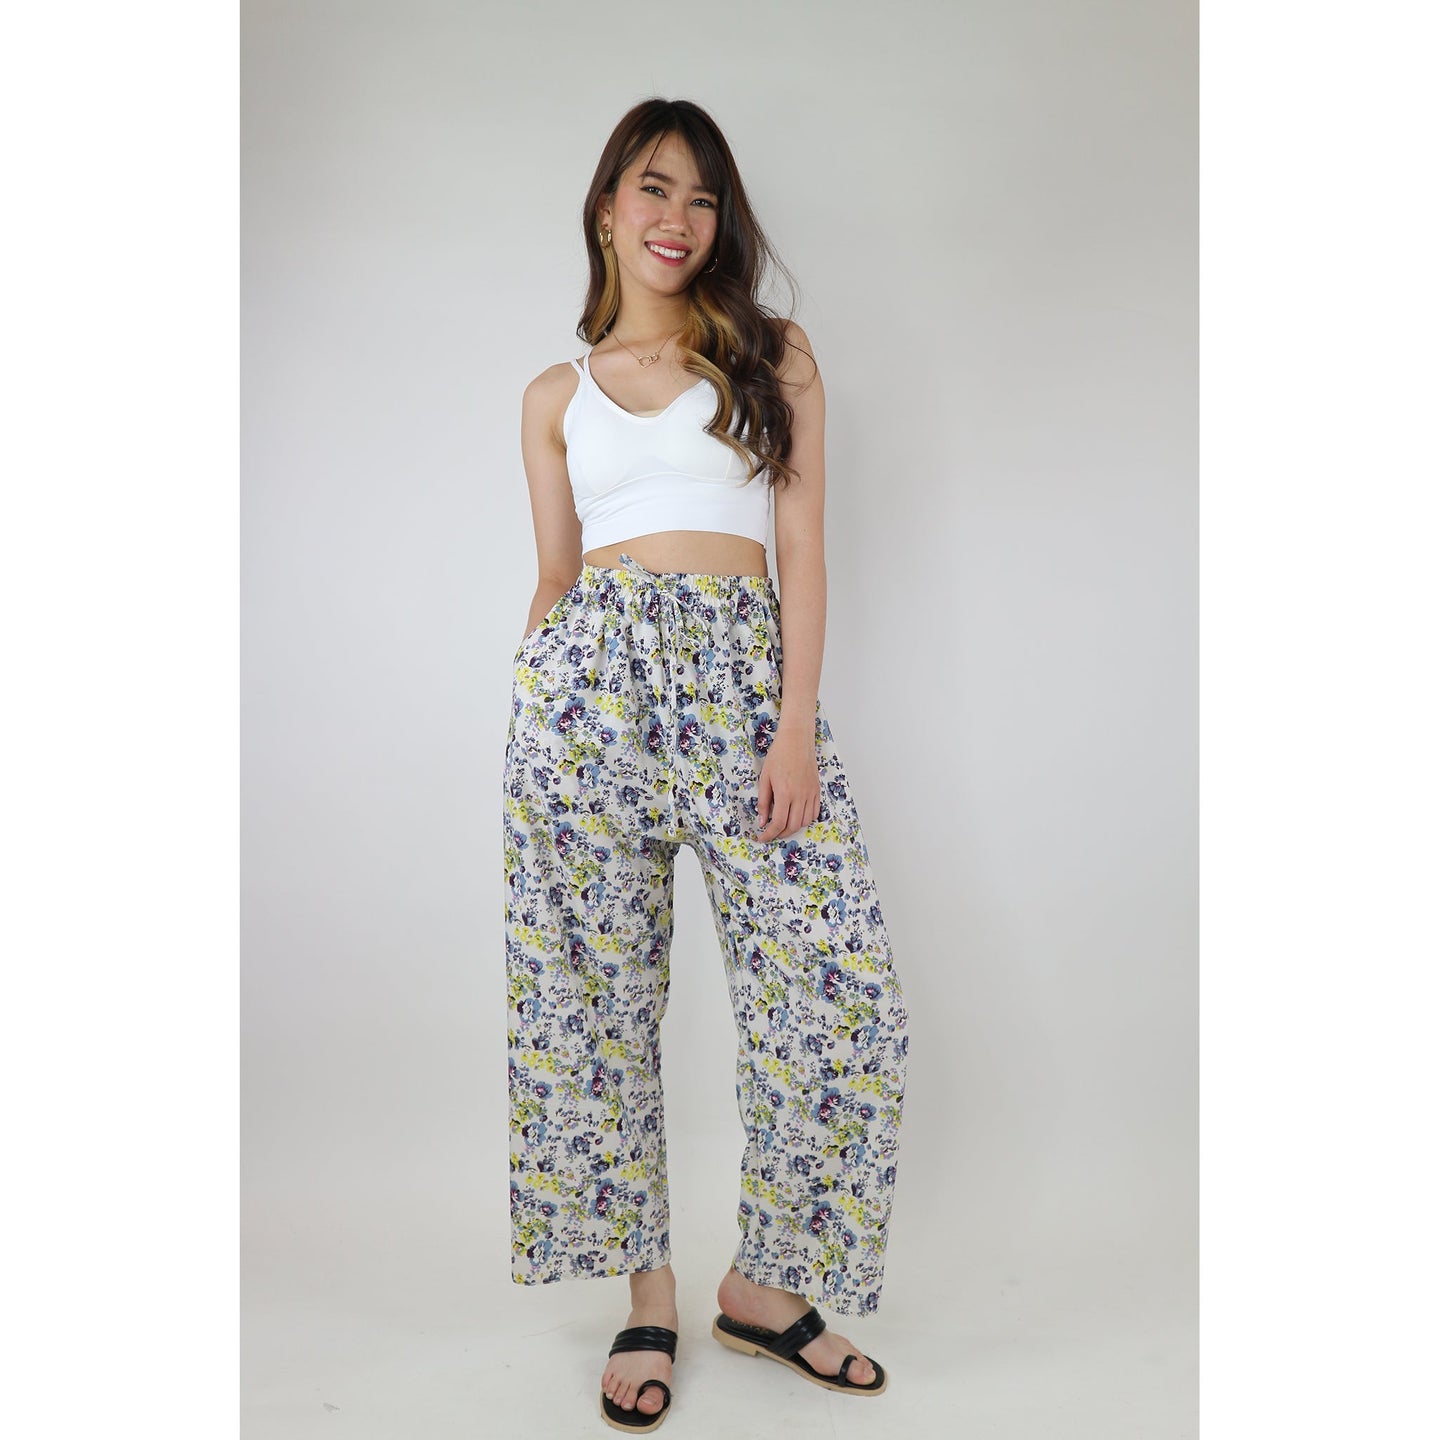 Daffodil Women's Lounge Drawstring Pants in White PP0216 130010 01